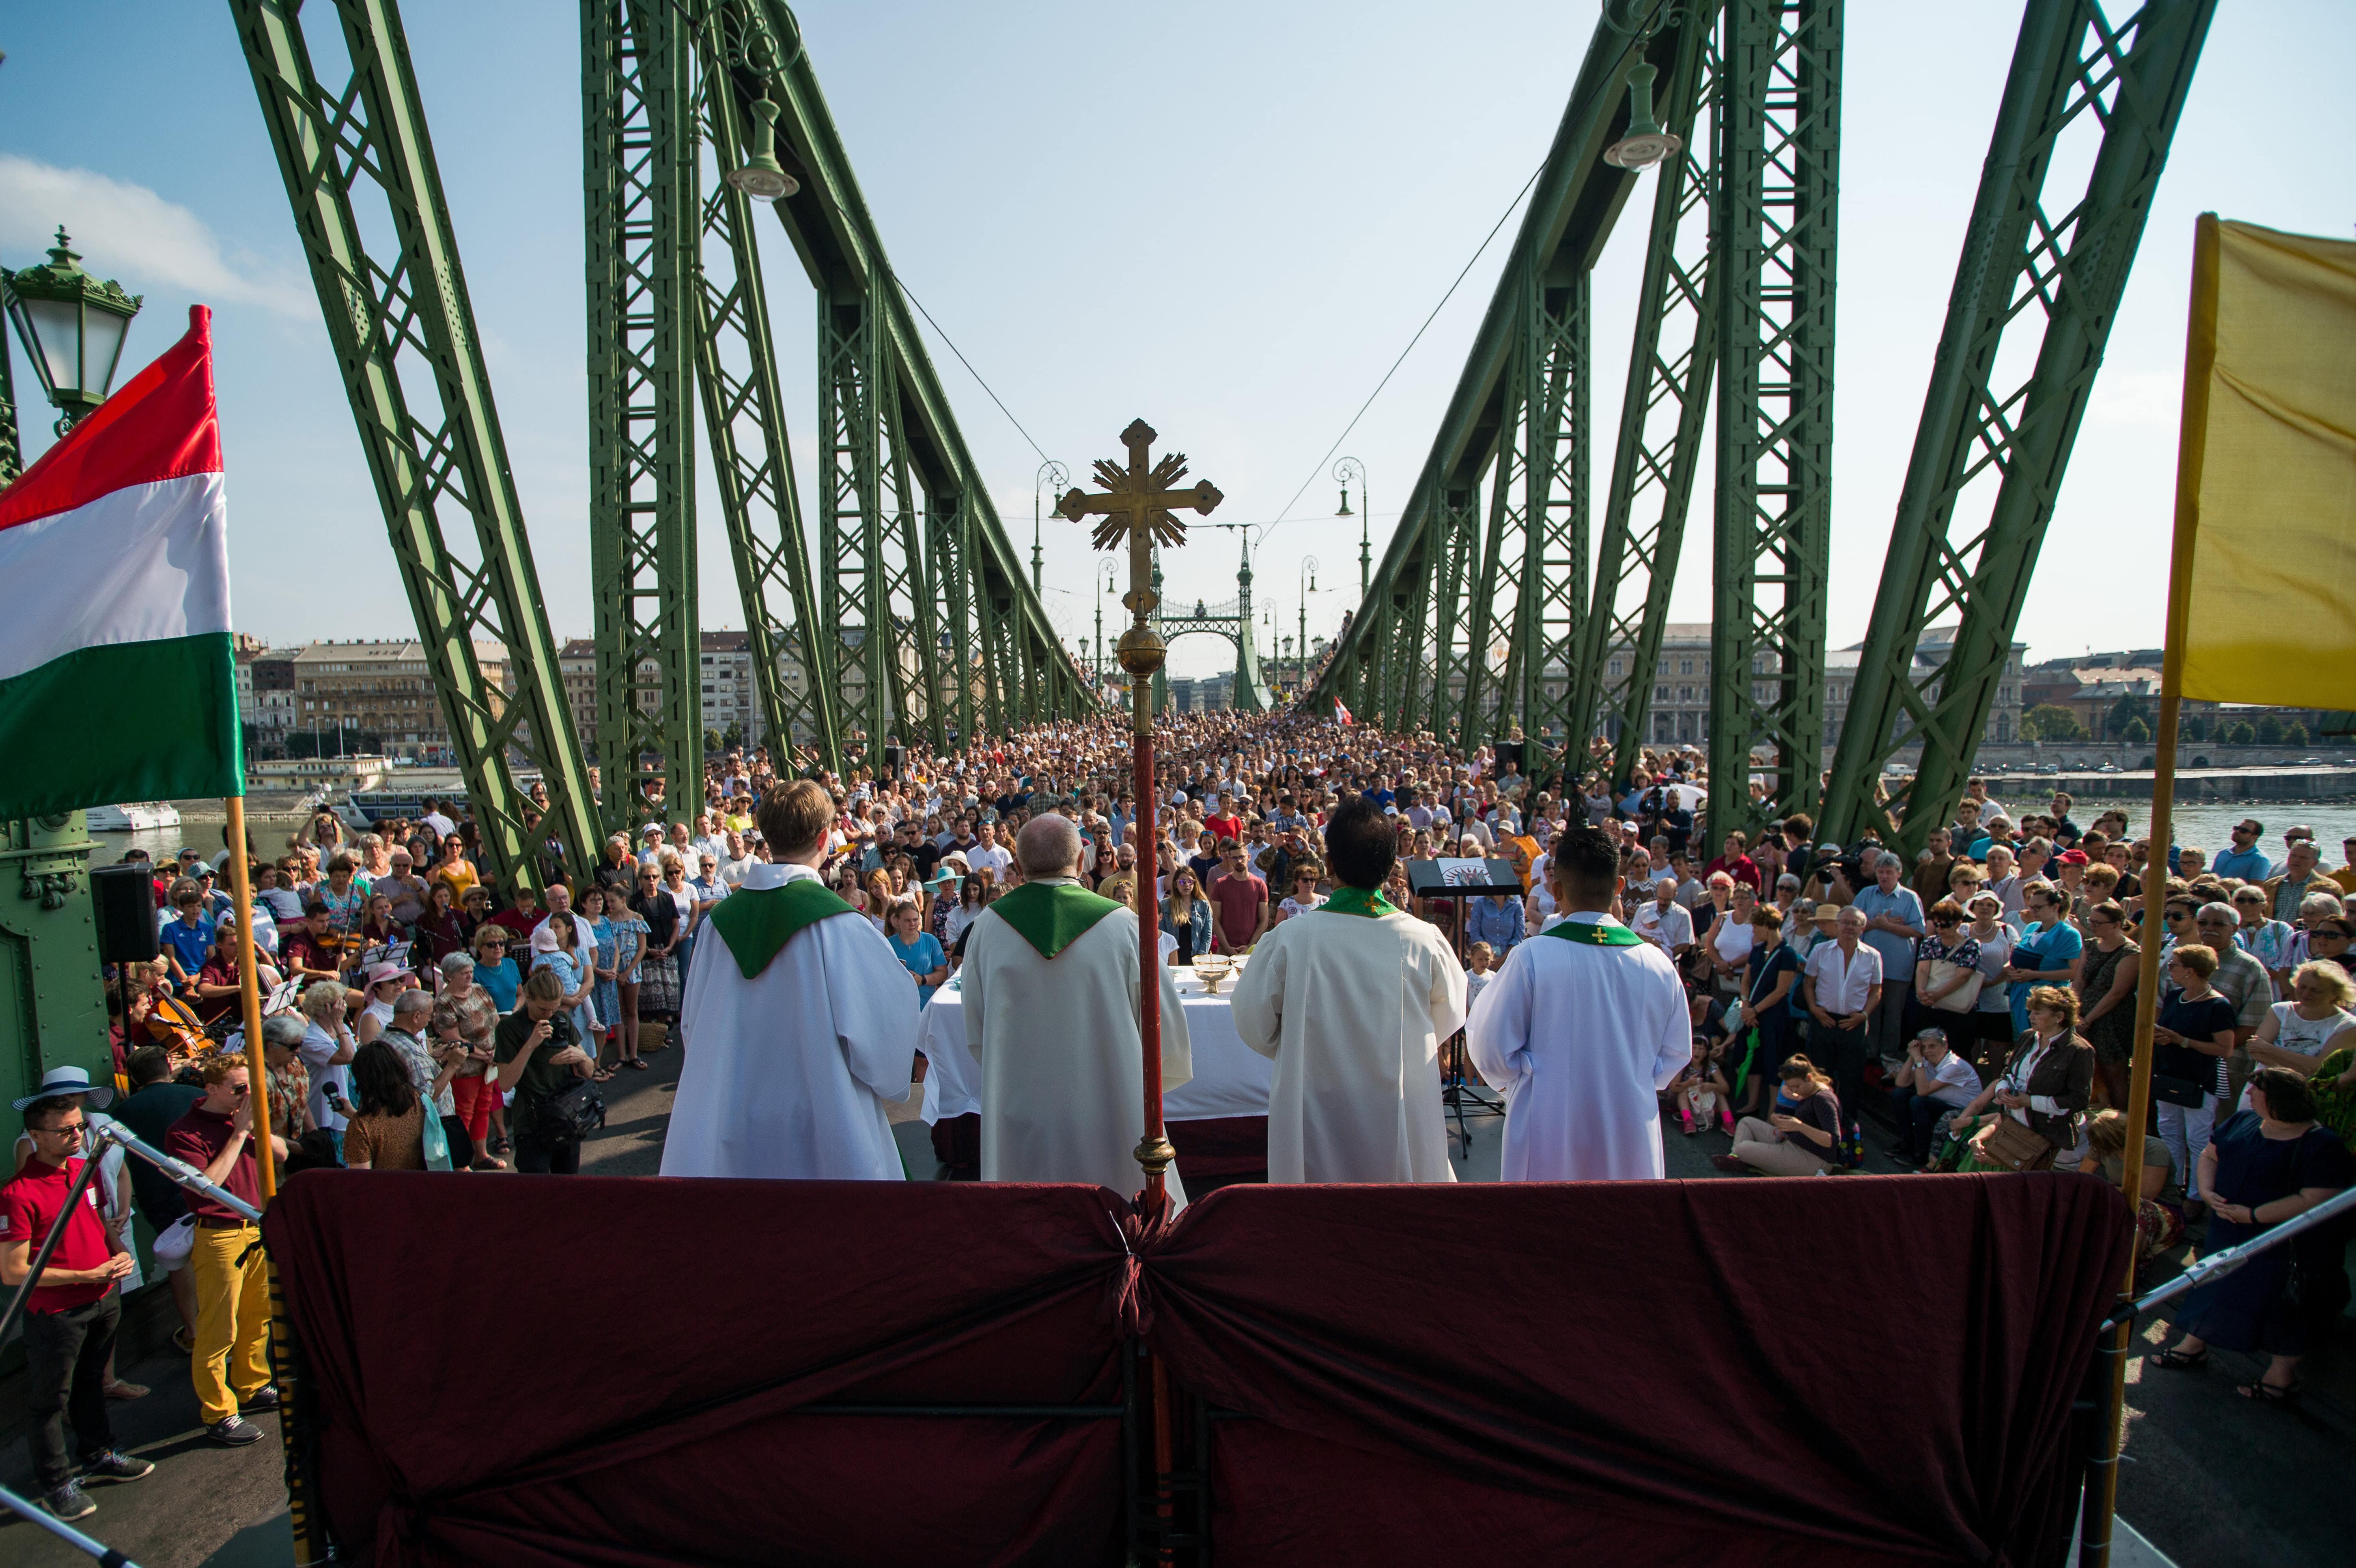 Mass was held on the Budapest's Freedom Bridge